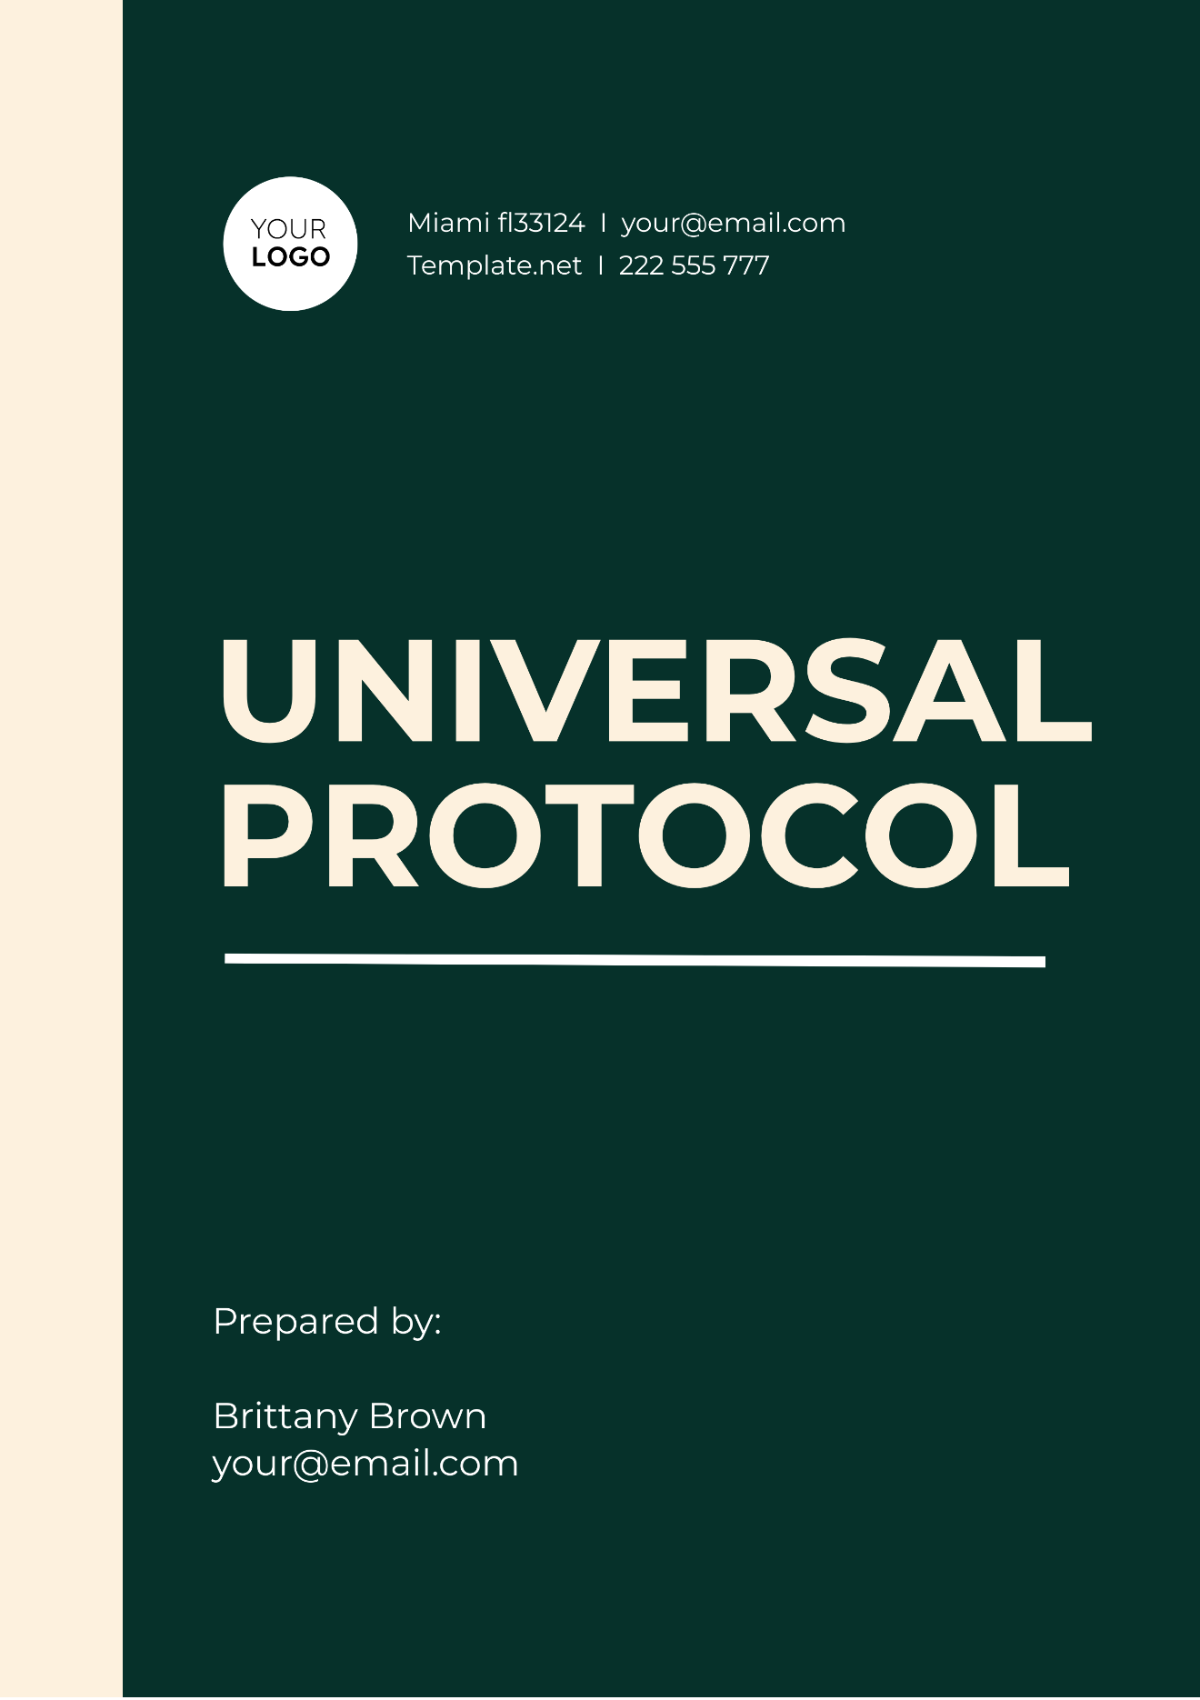 Universal Protocol Template